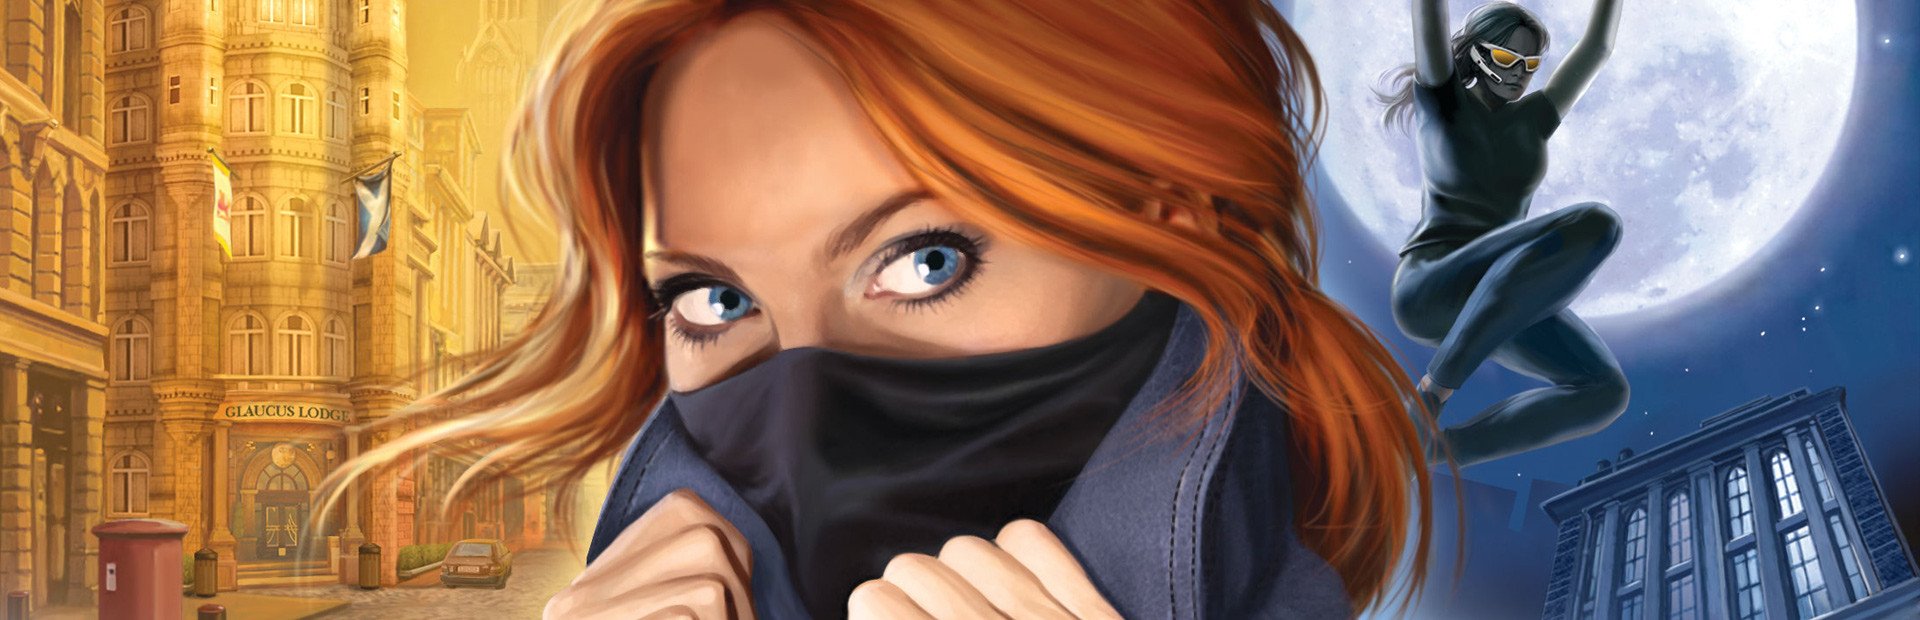 Nancy Drew®: The Silent Spy cover image